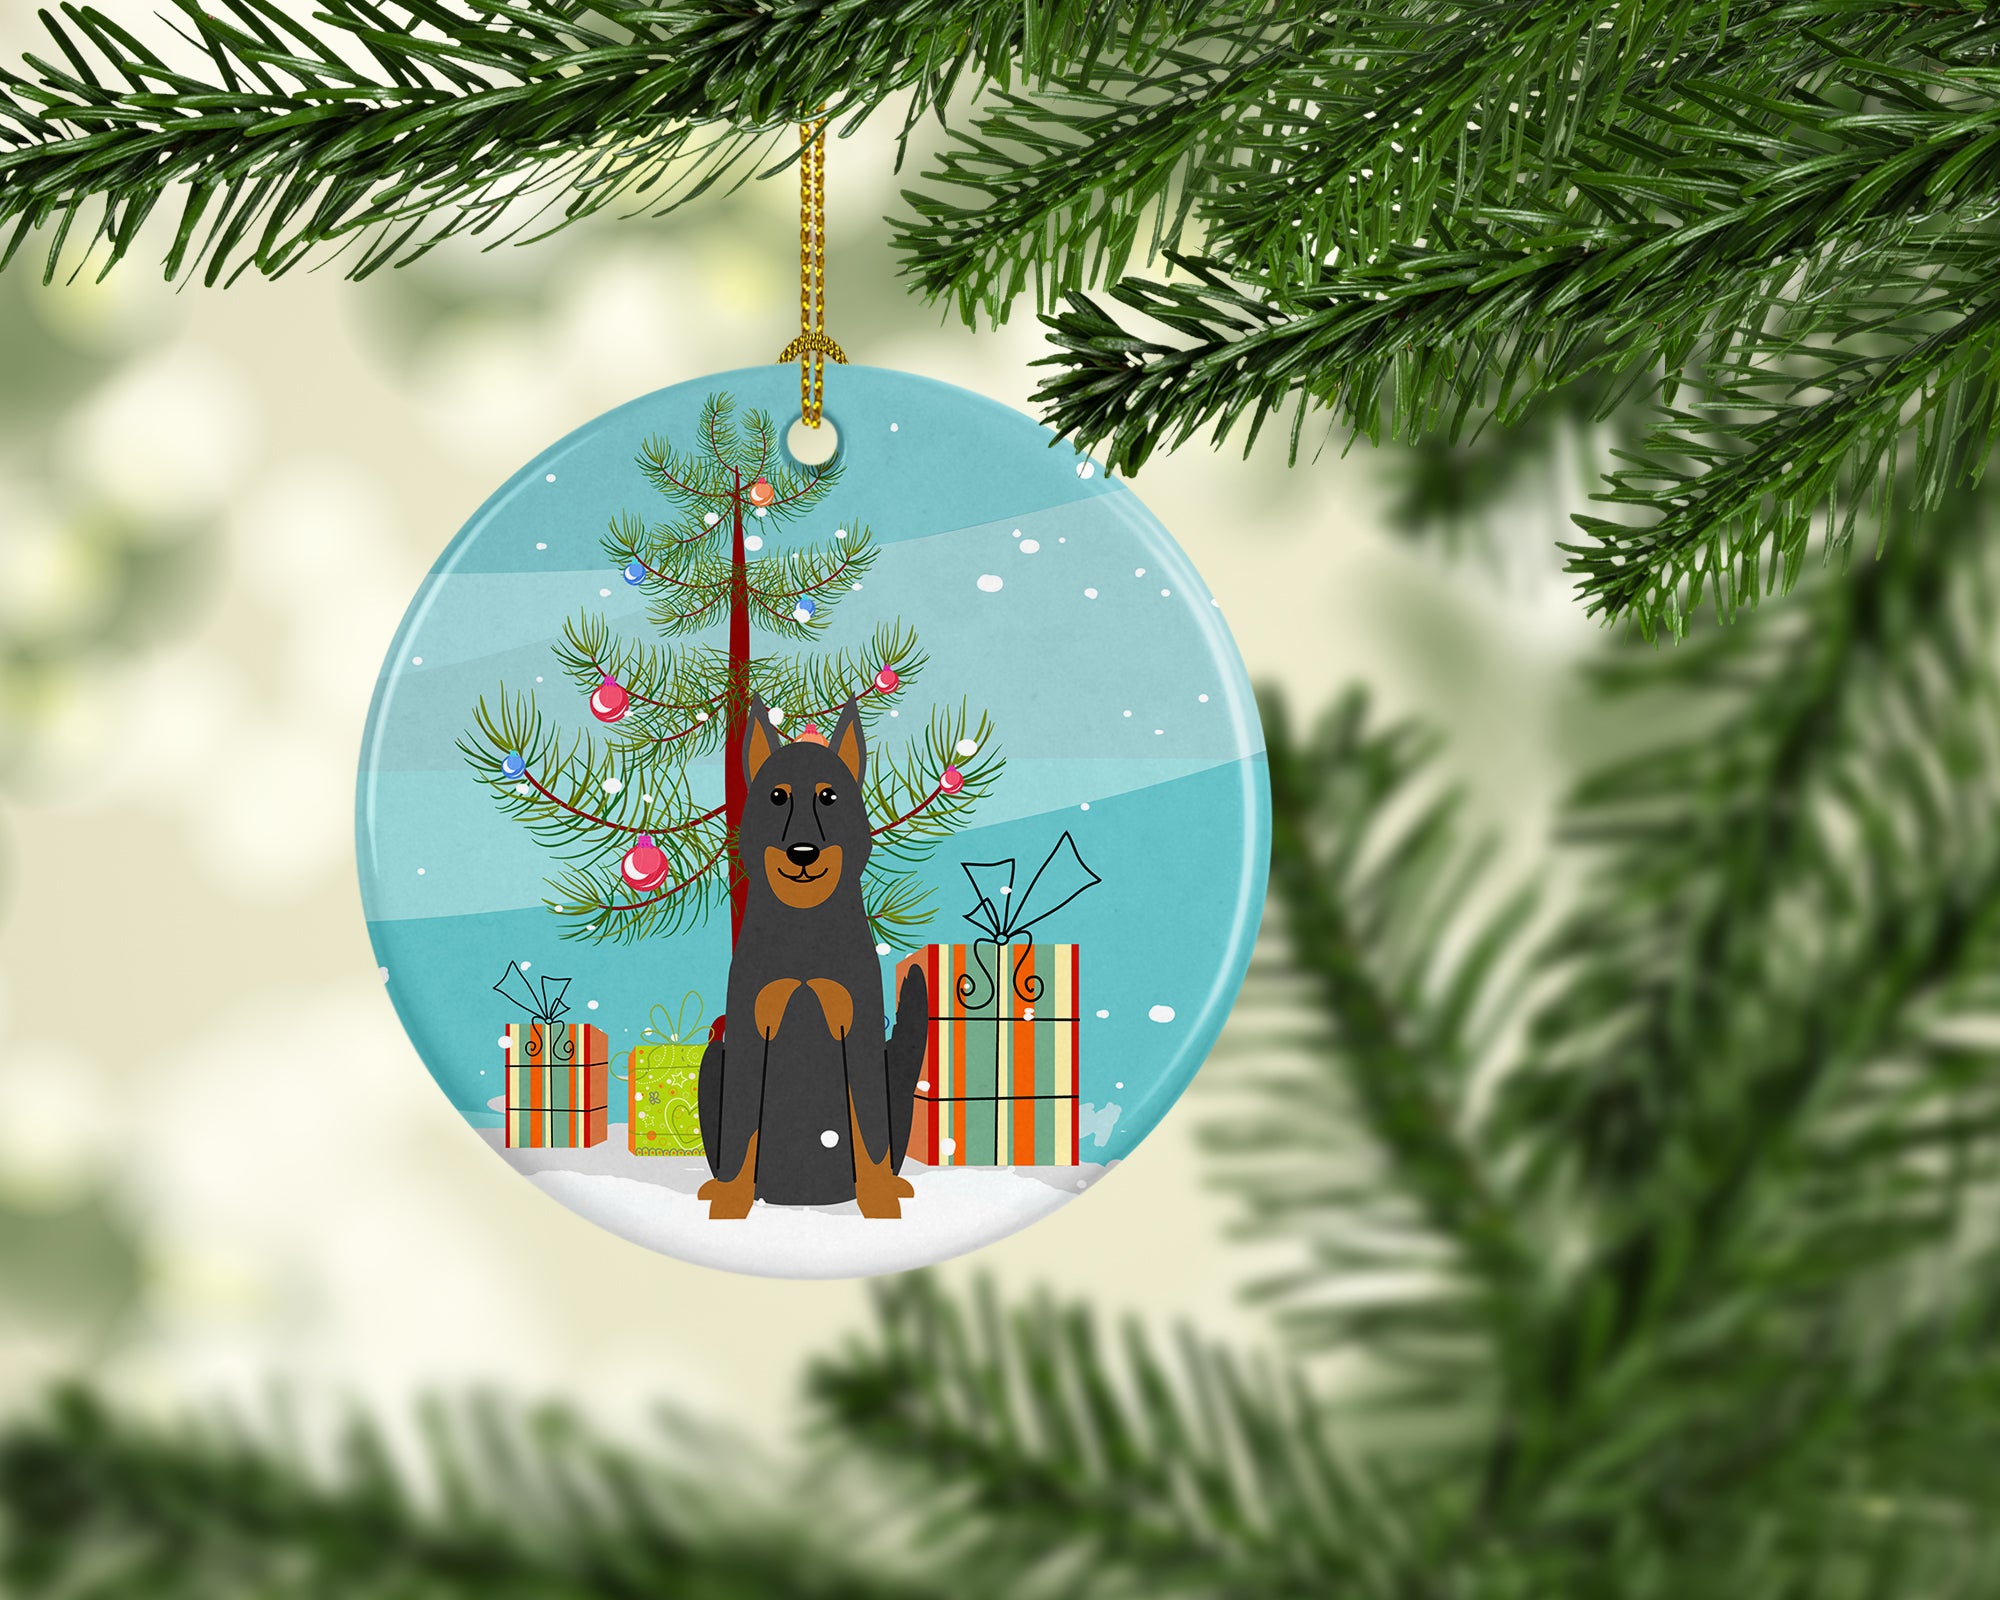 Merry Christmas Tree Beauce Shepherd Dog Ceramic Ornament BB4205CO1 - the-store.com